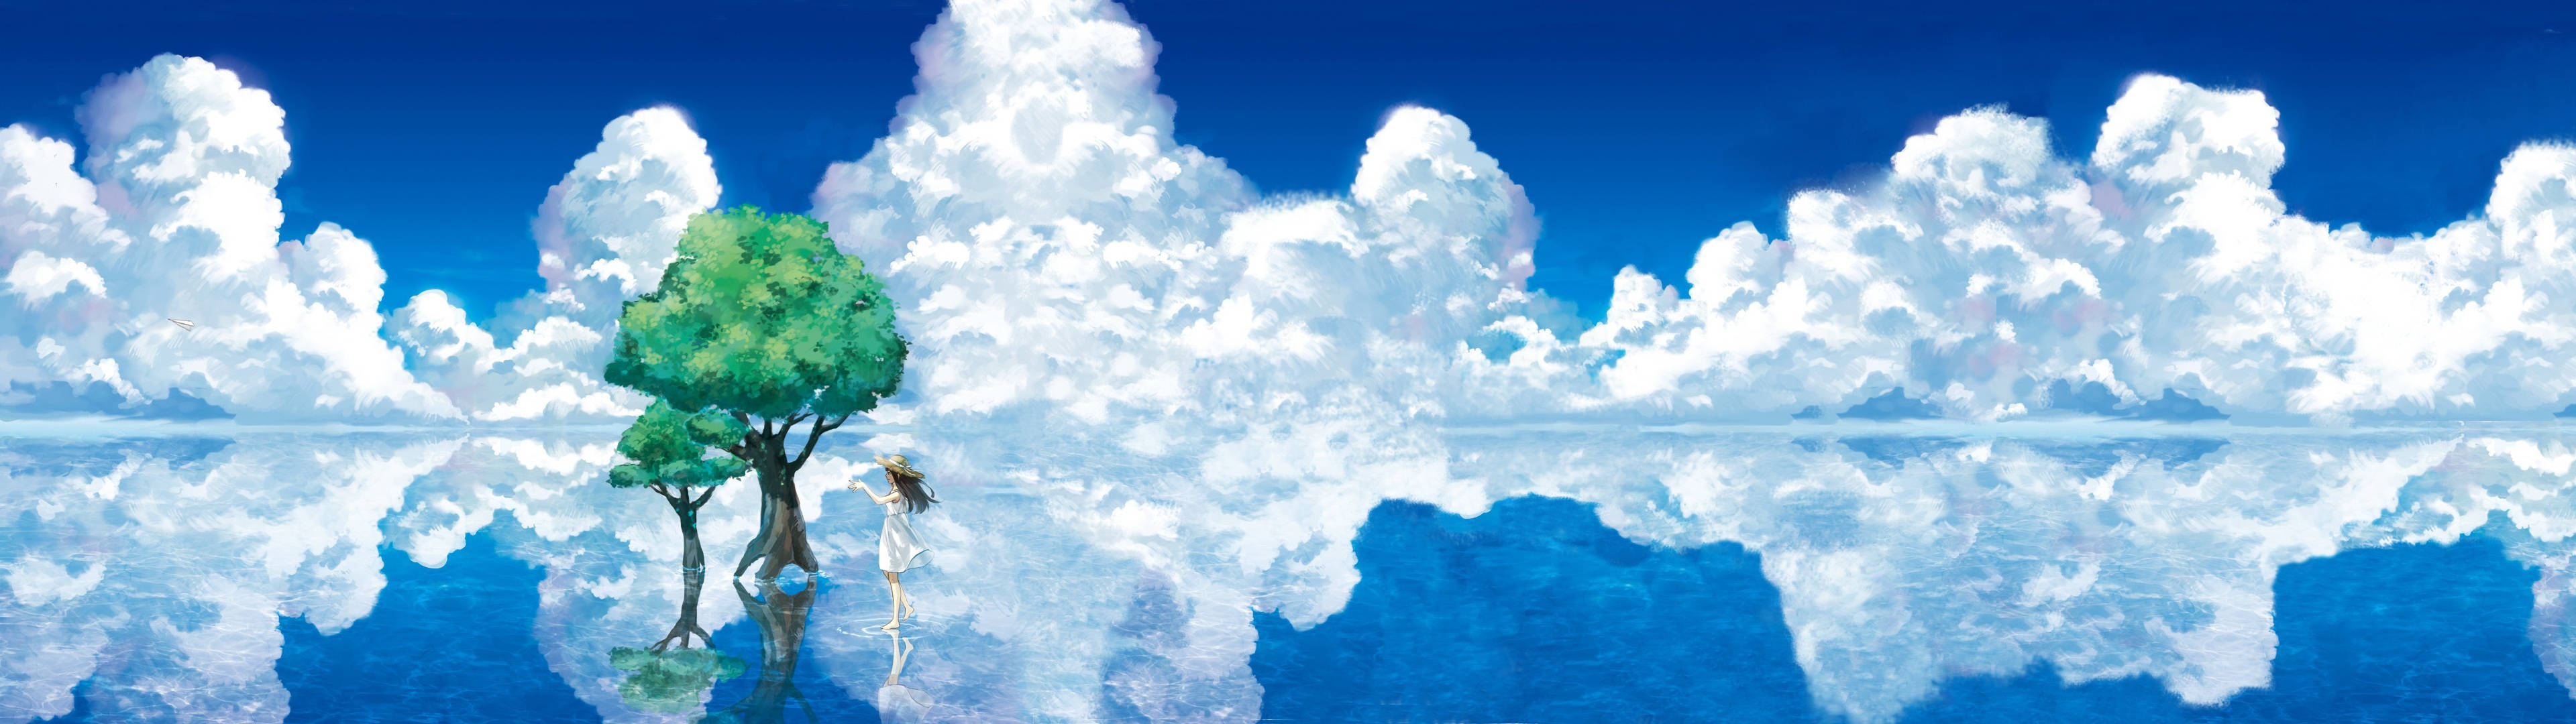 Anime Scenery 4k Reflection Wallpaper